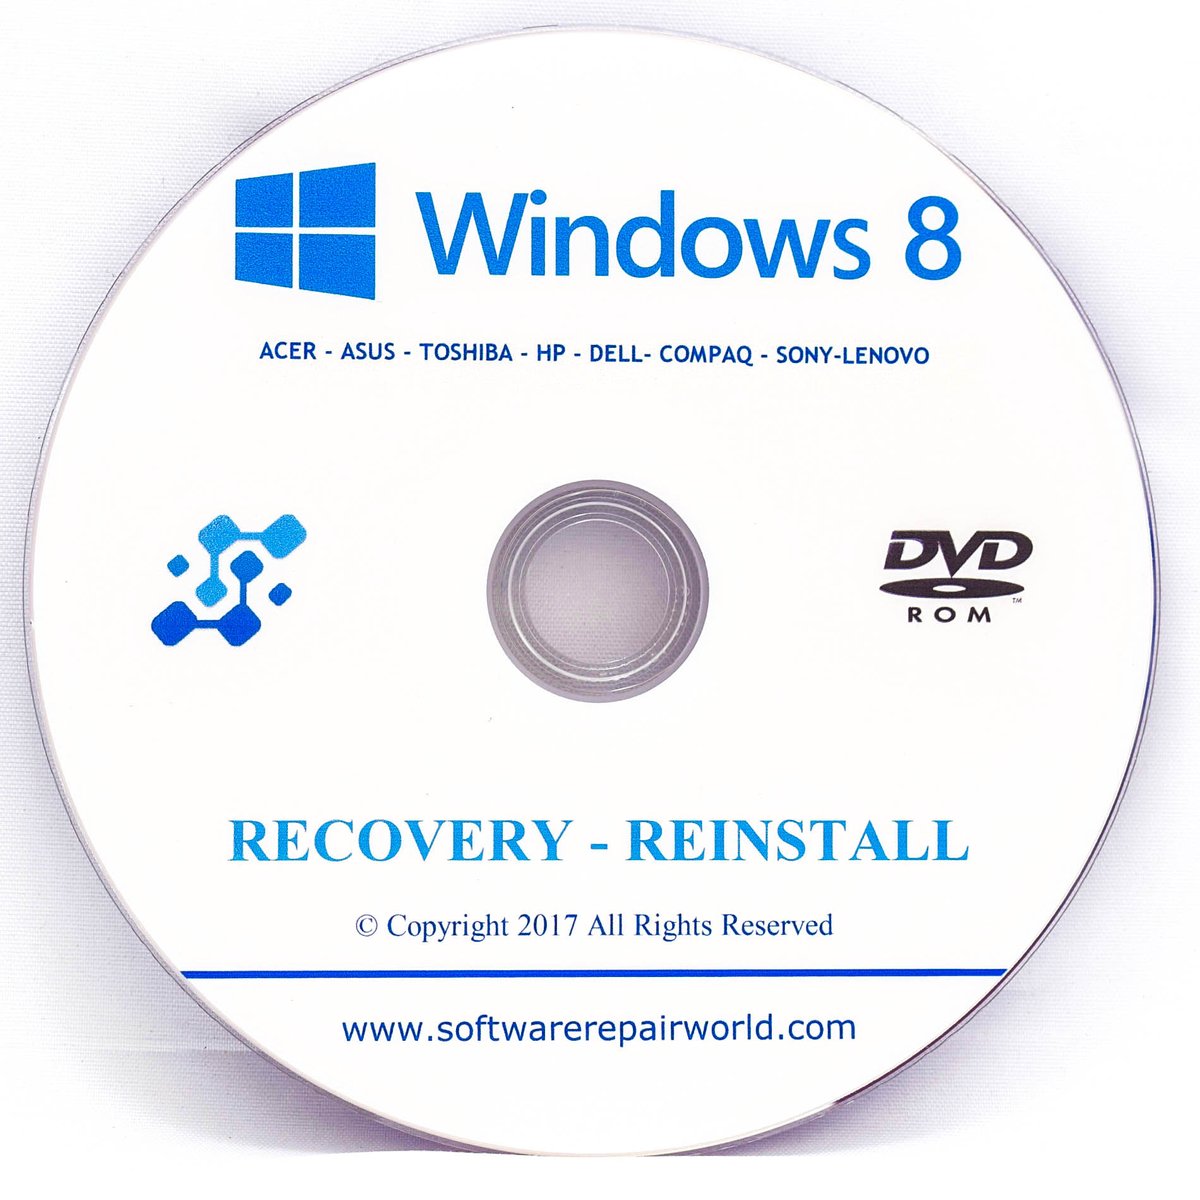 Download windows 8 disk image download burp suite professional for windows